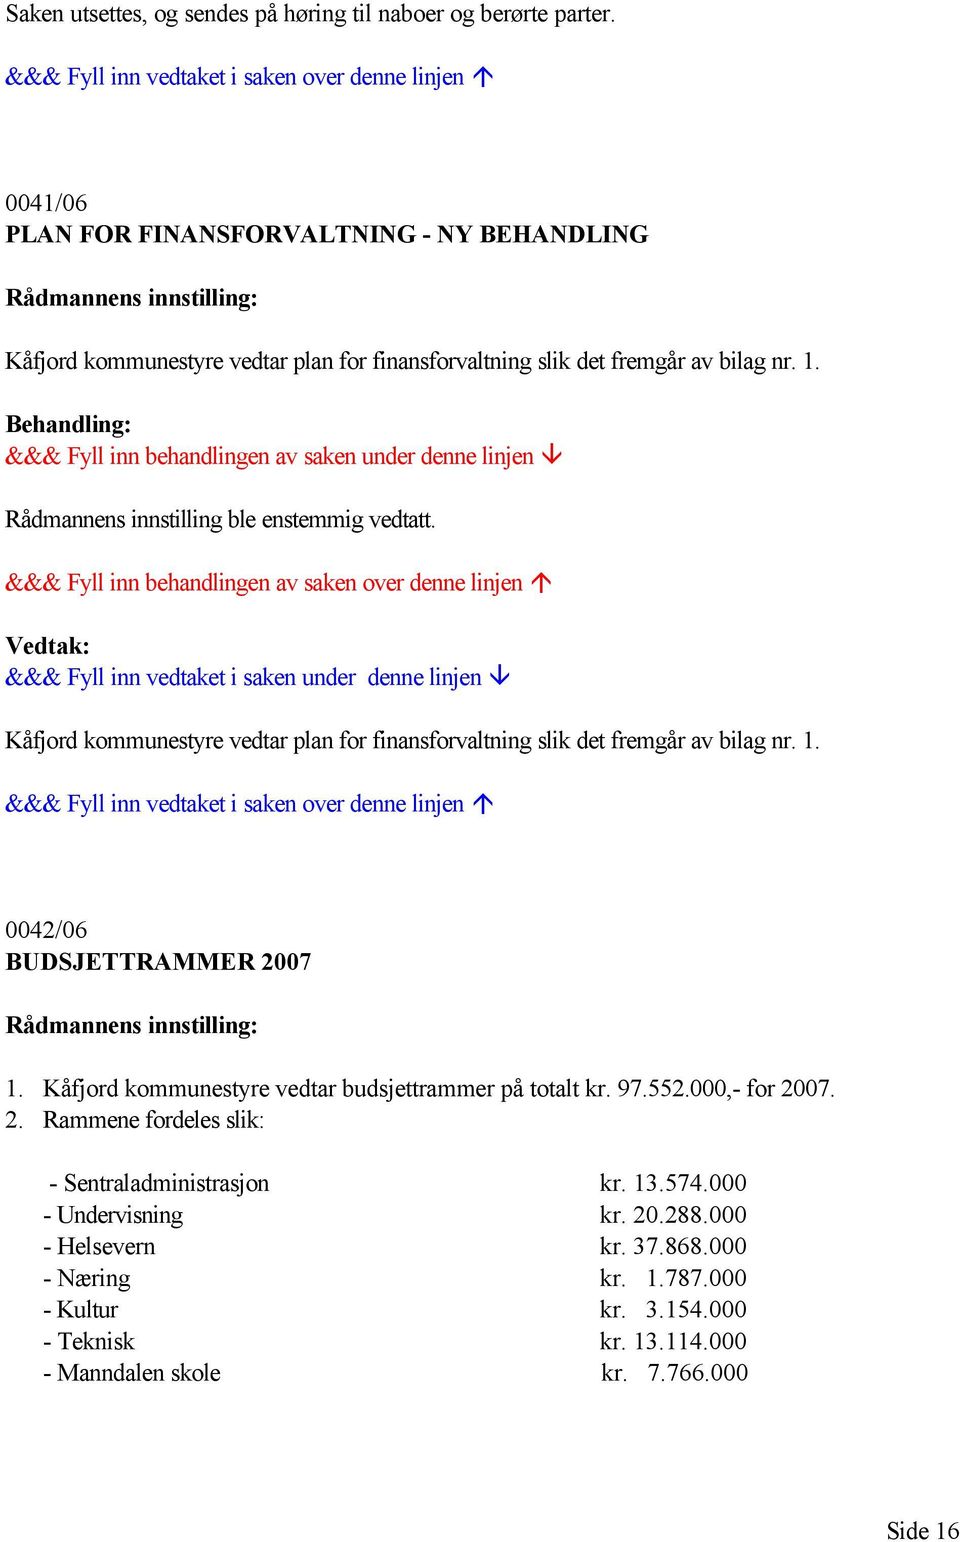 Rådmannens innstilling ble enstemmig vedtatt. Kåfjord kommunestyre vedtar plan for finansforvaltning slik det fremgår av bilag nr. 1.